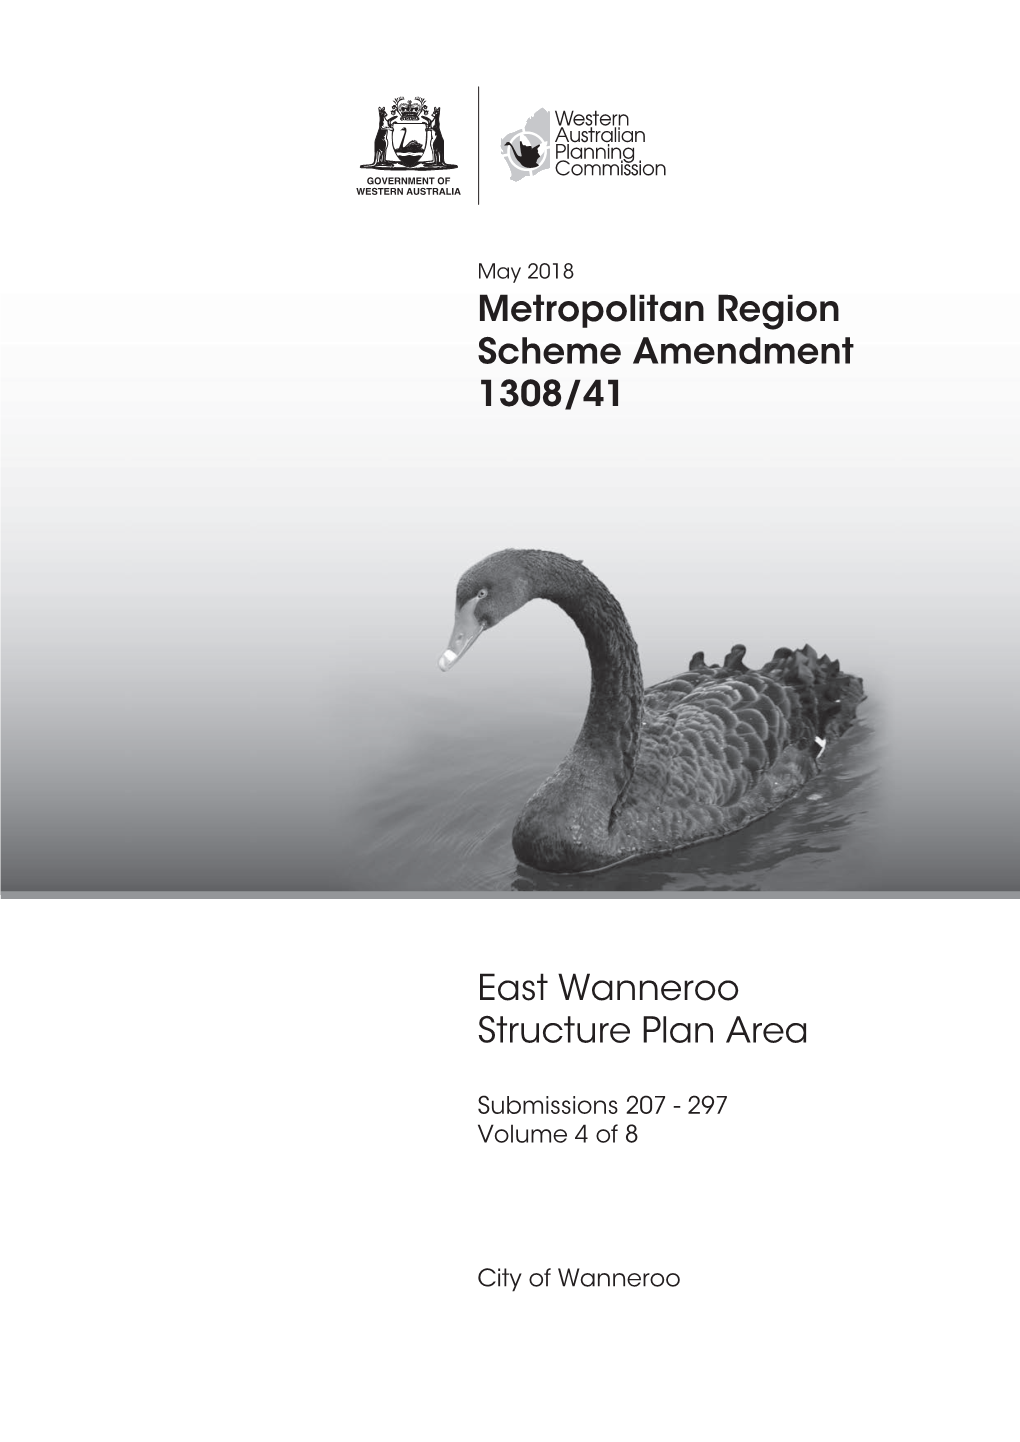 East Wanneroo Structure Plan Area Metropolitan Region Scheme Amendment 1308/41